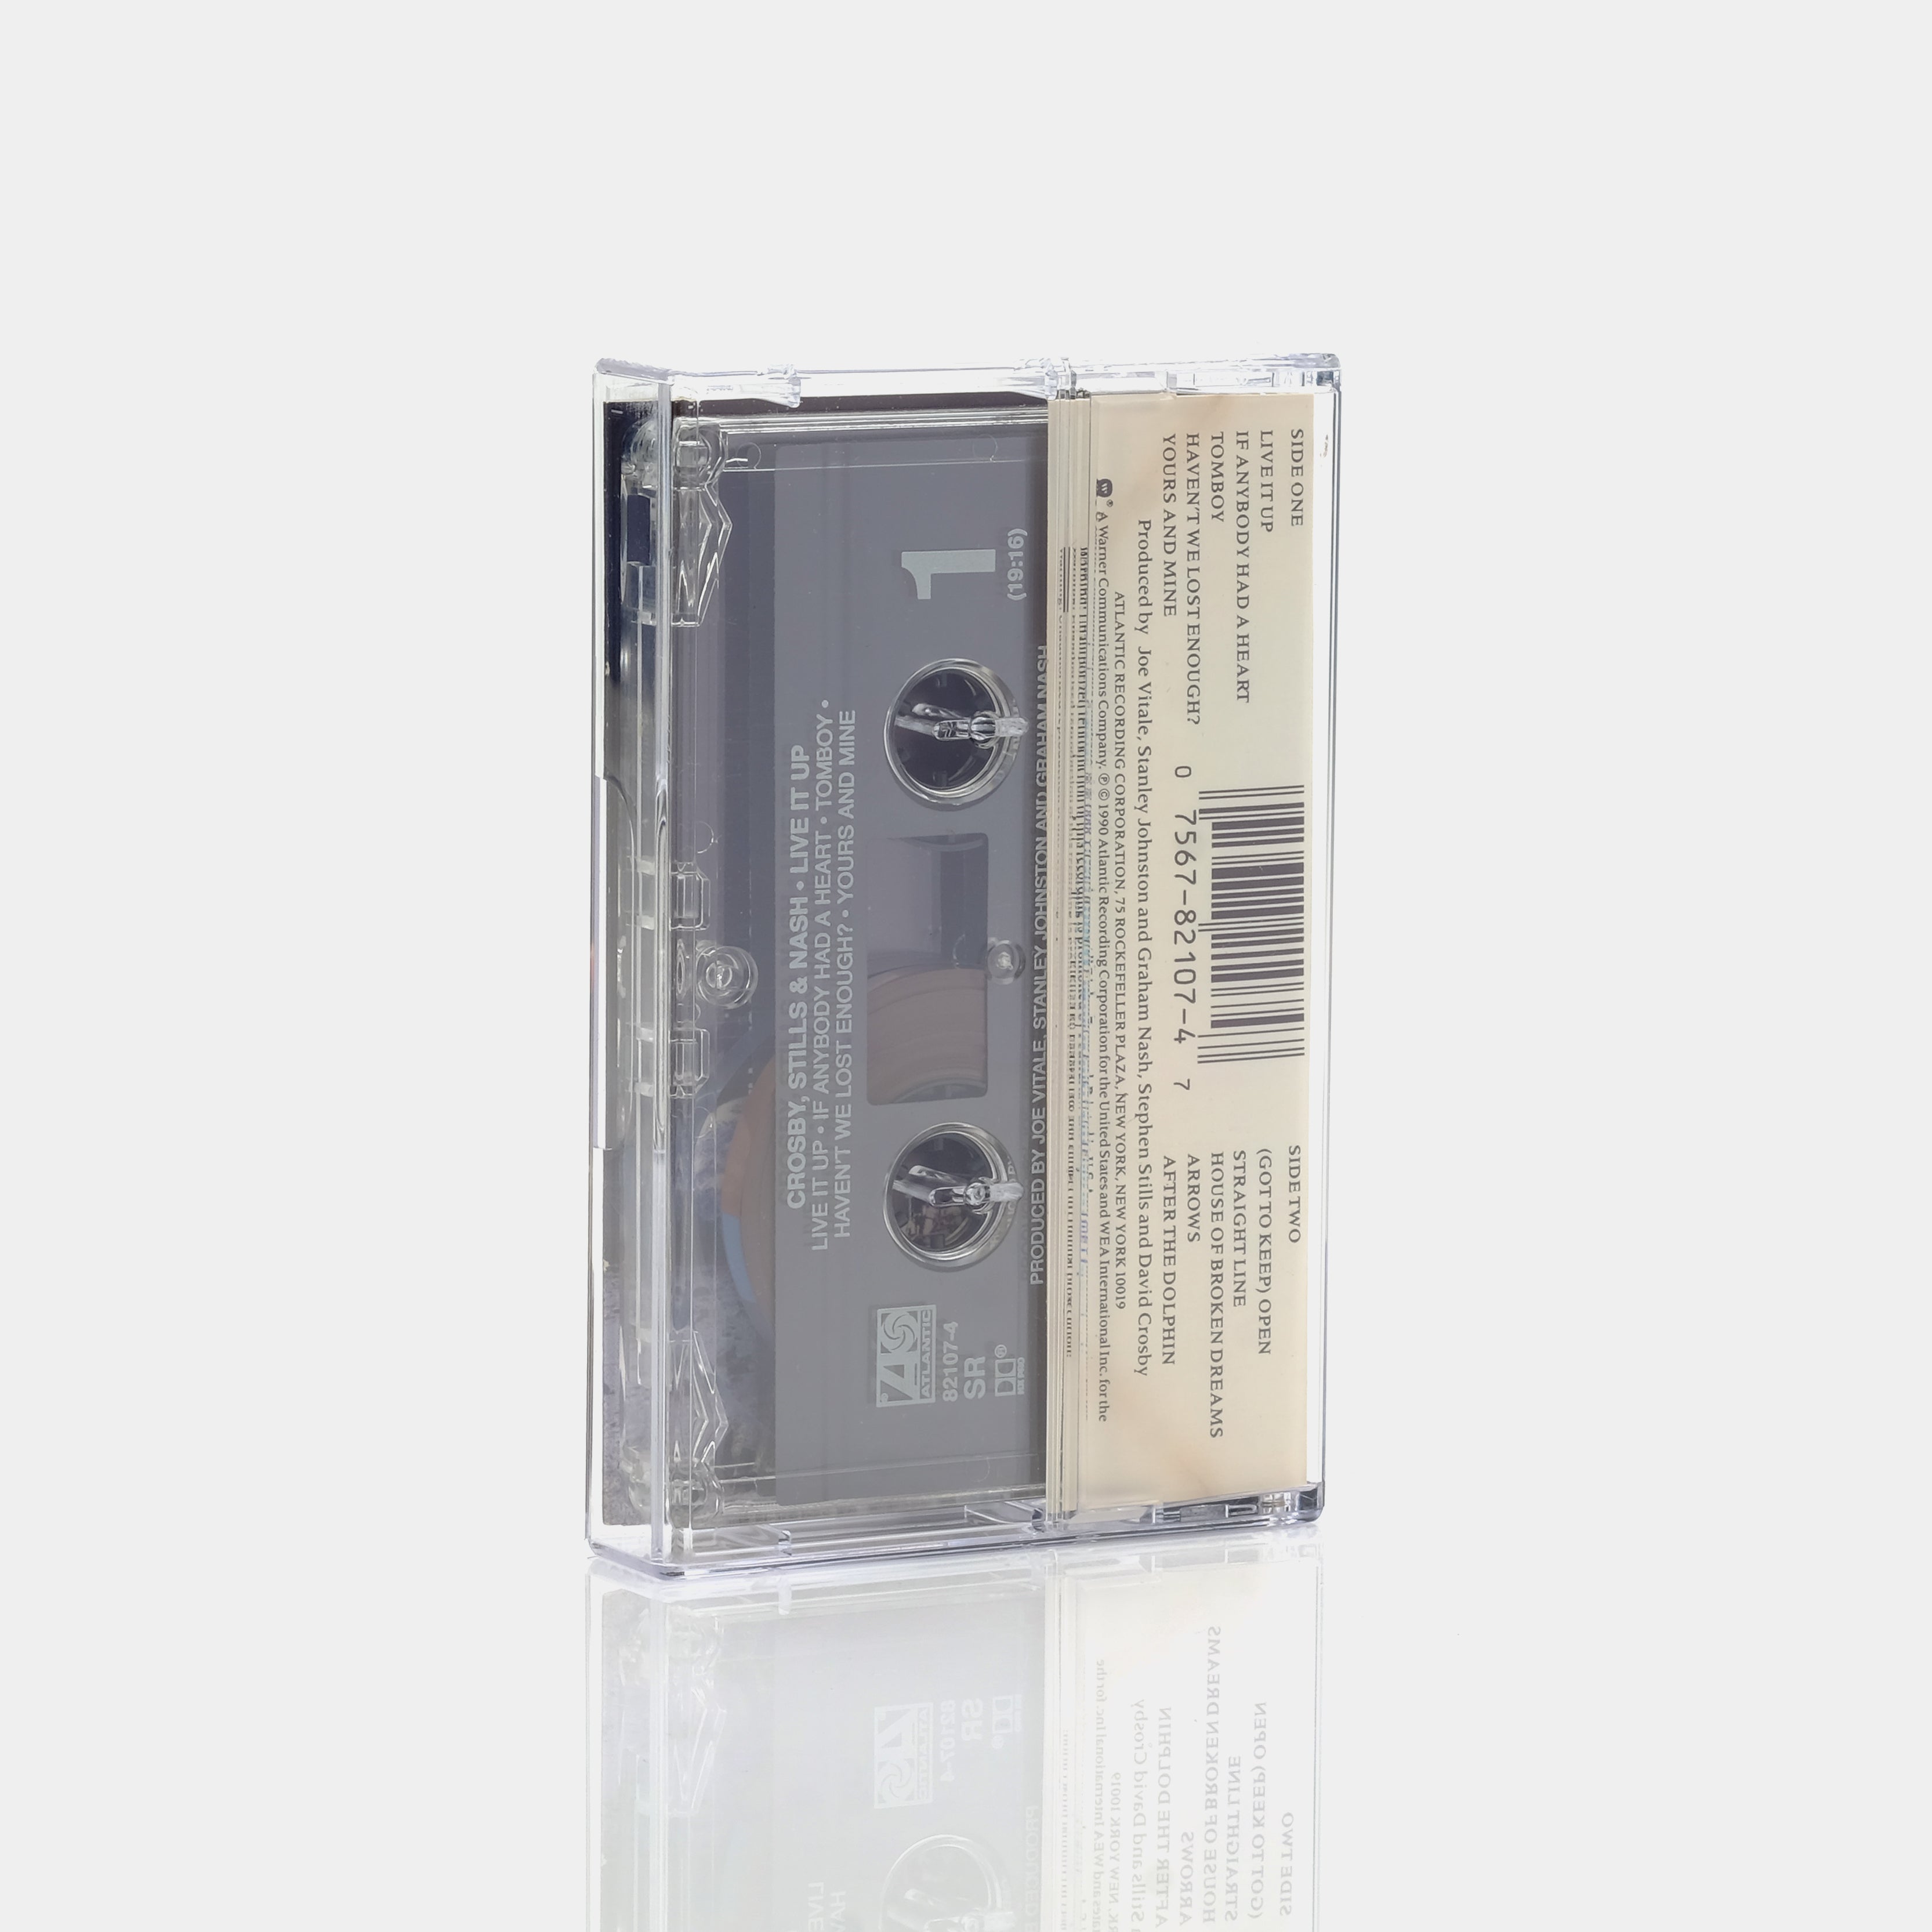 Crosby, Stills & Nash - Live It Up Cassette Tape